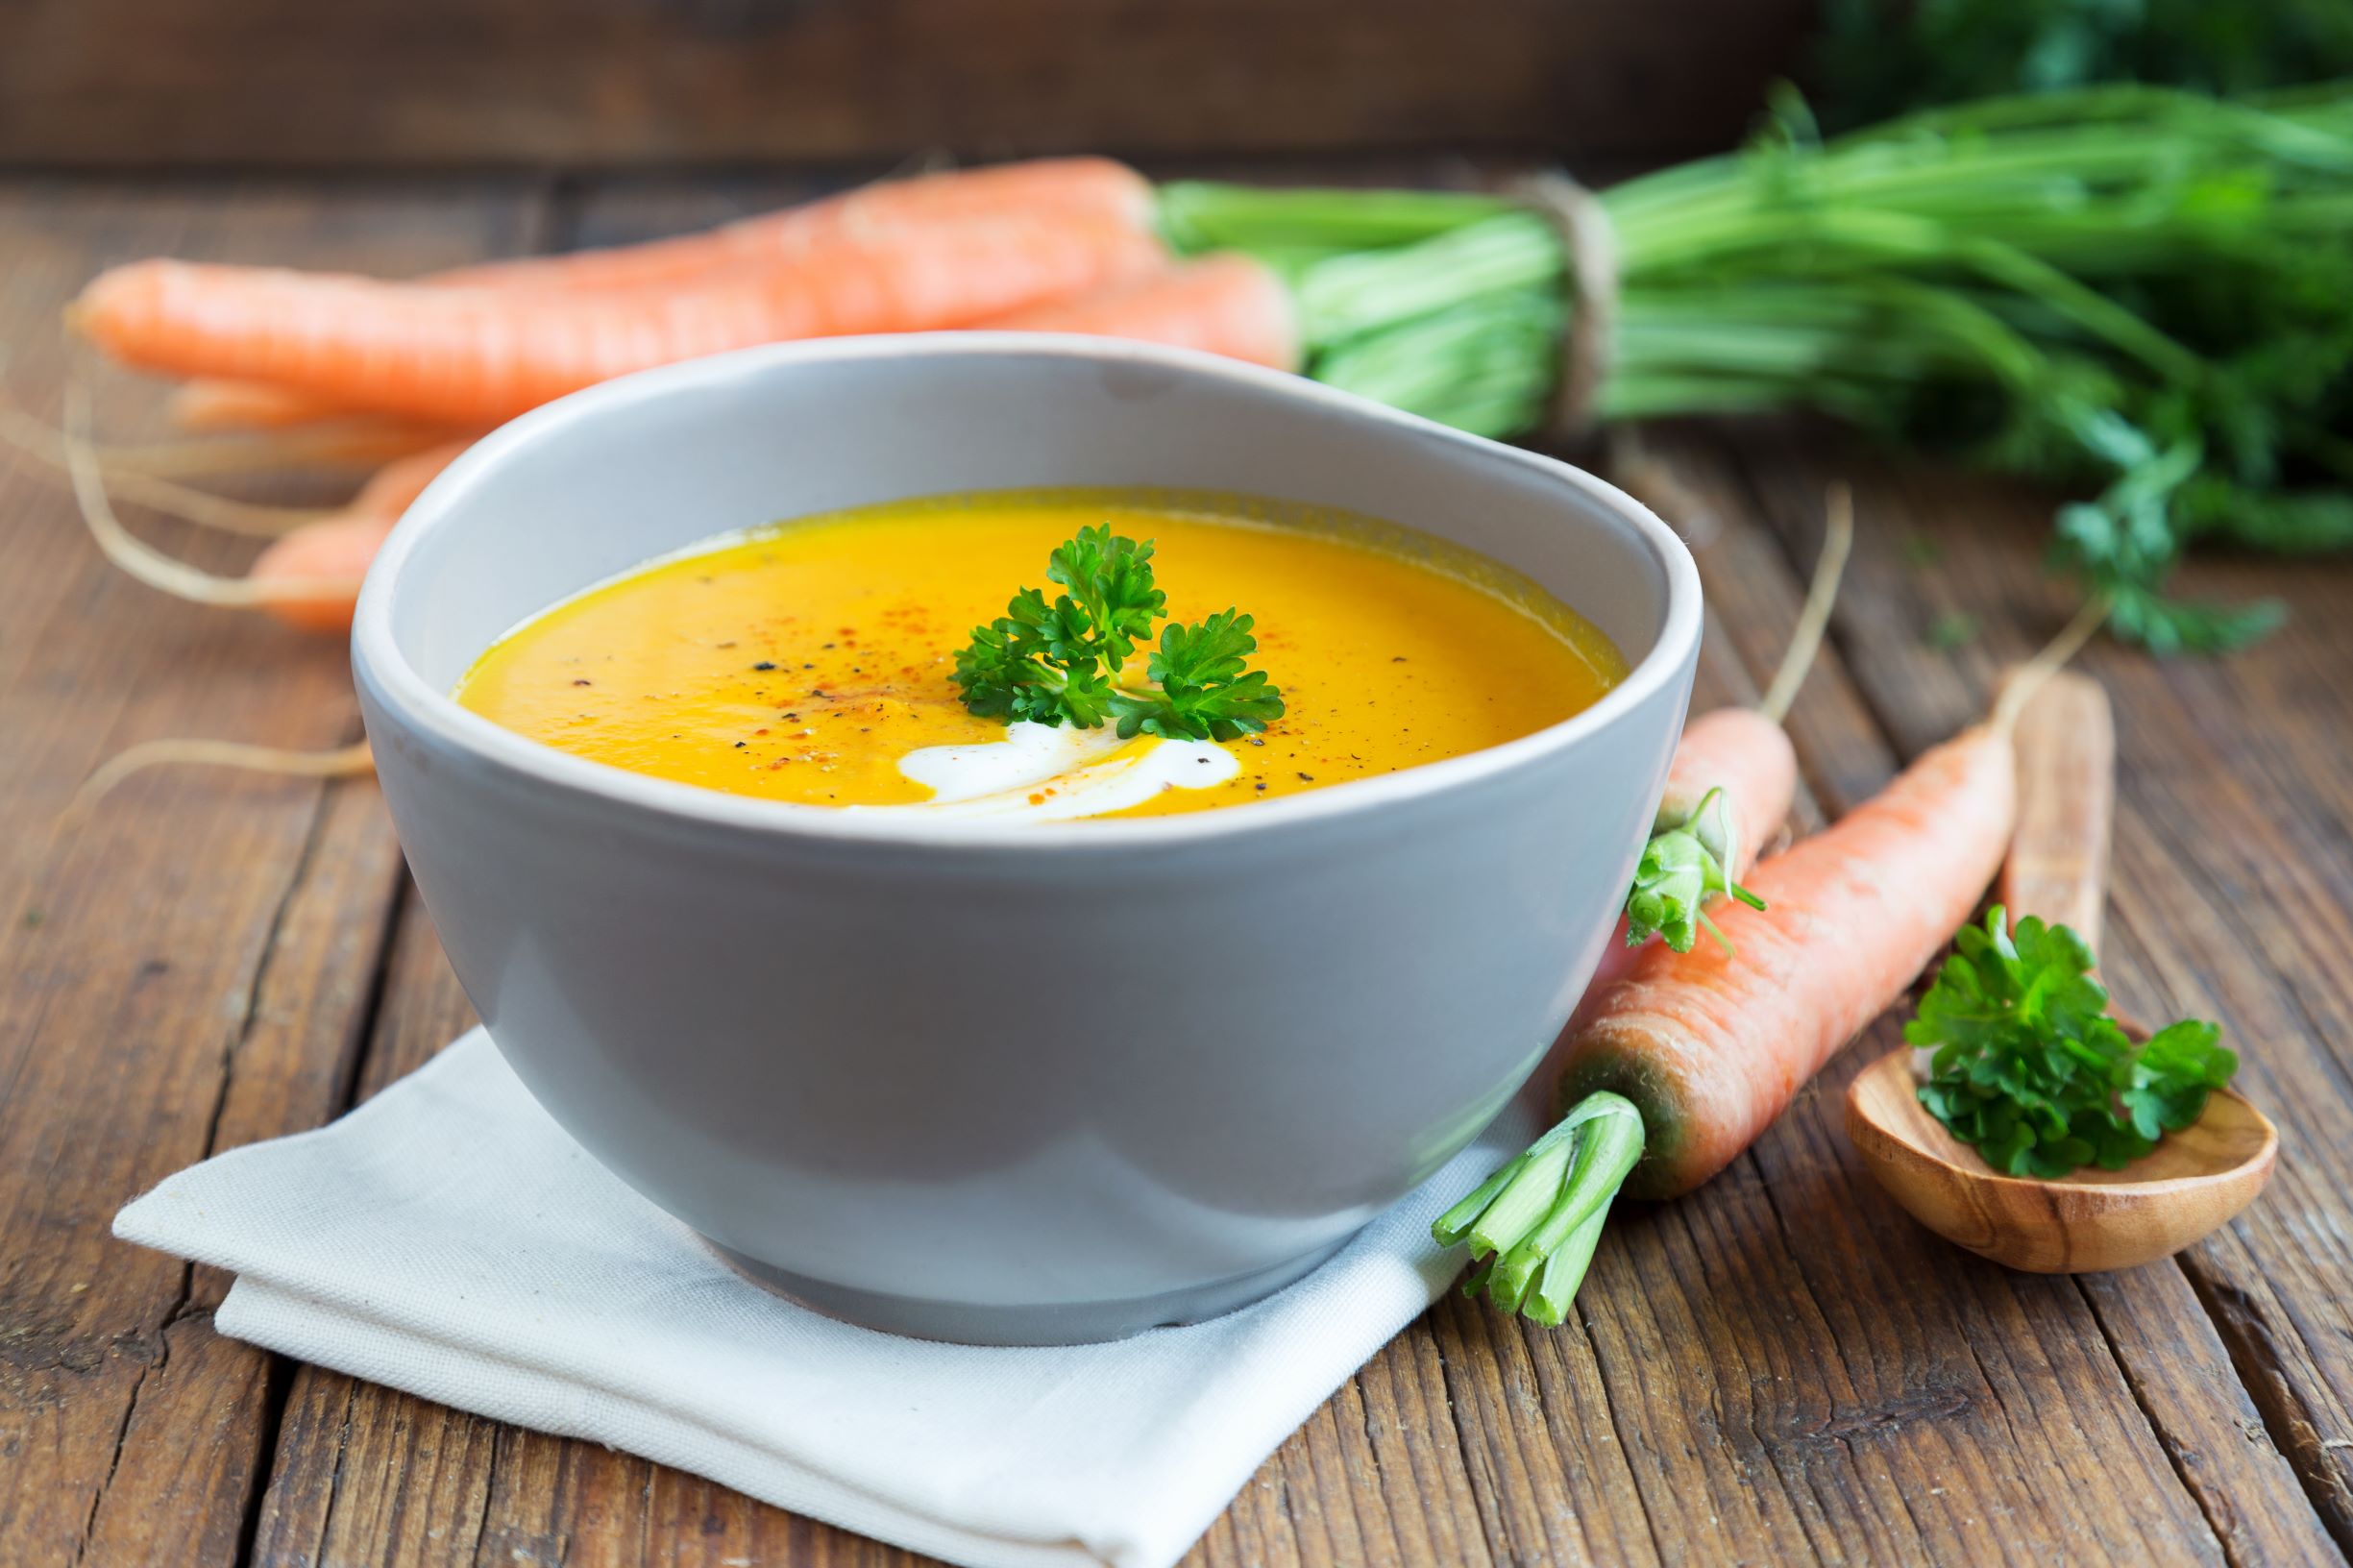 Tiana Fairtrade Organics Carrot and Coriander Soup Recipe